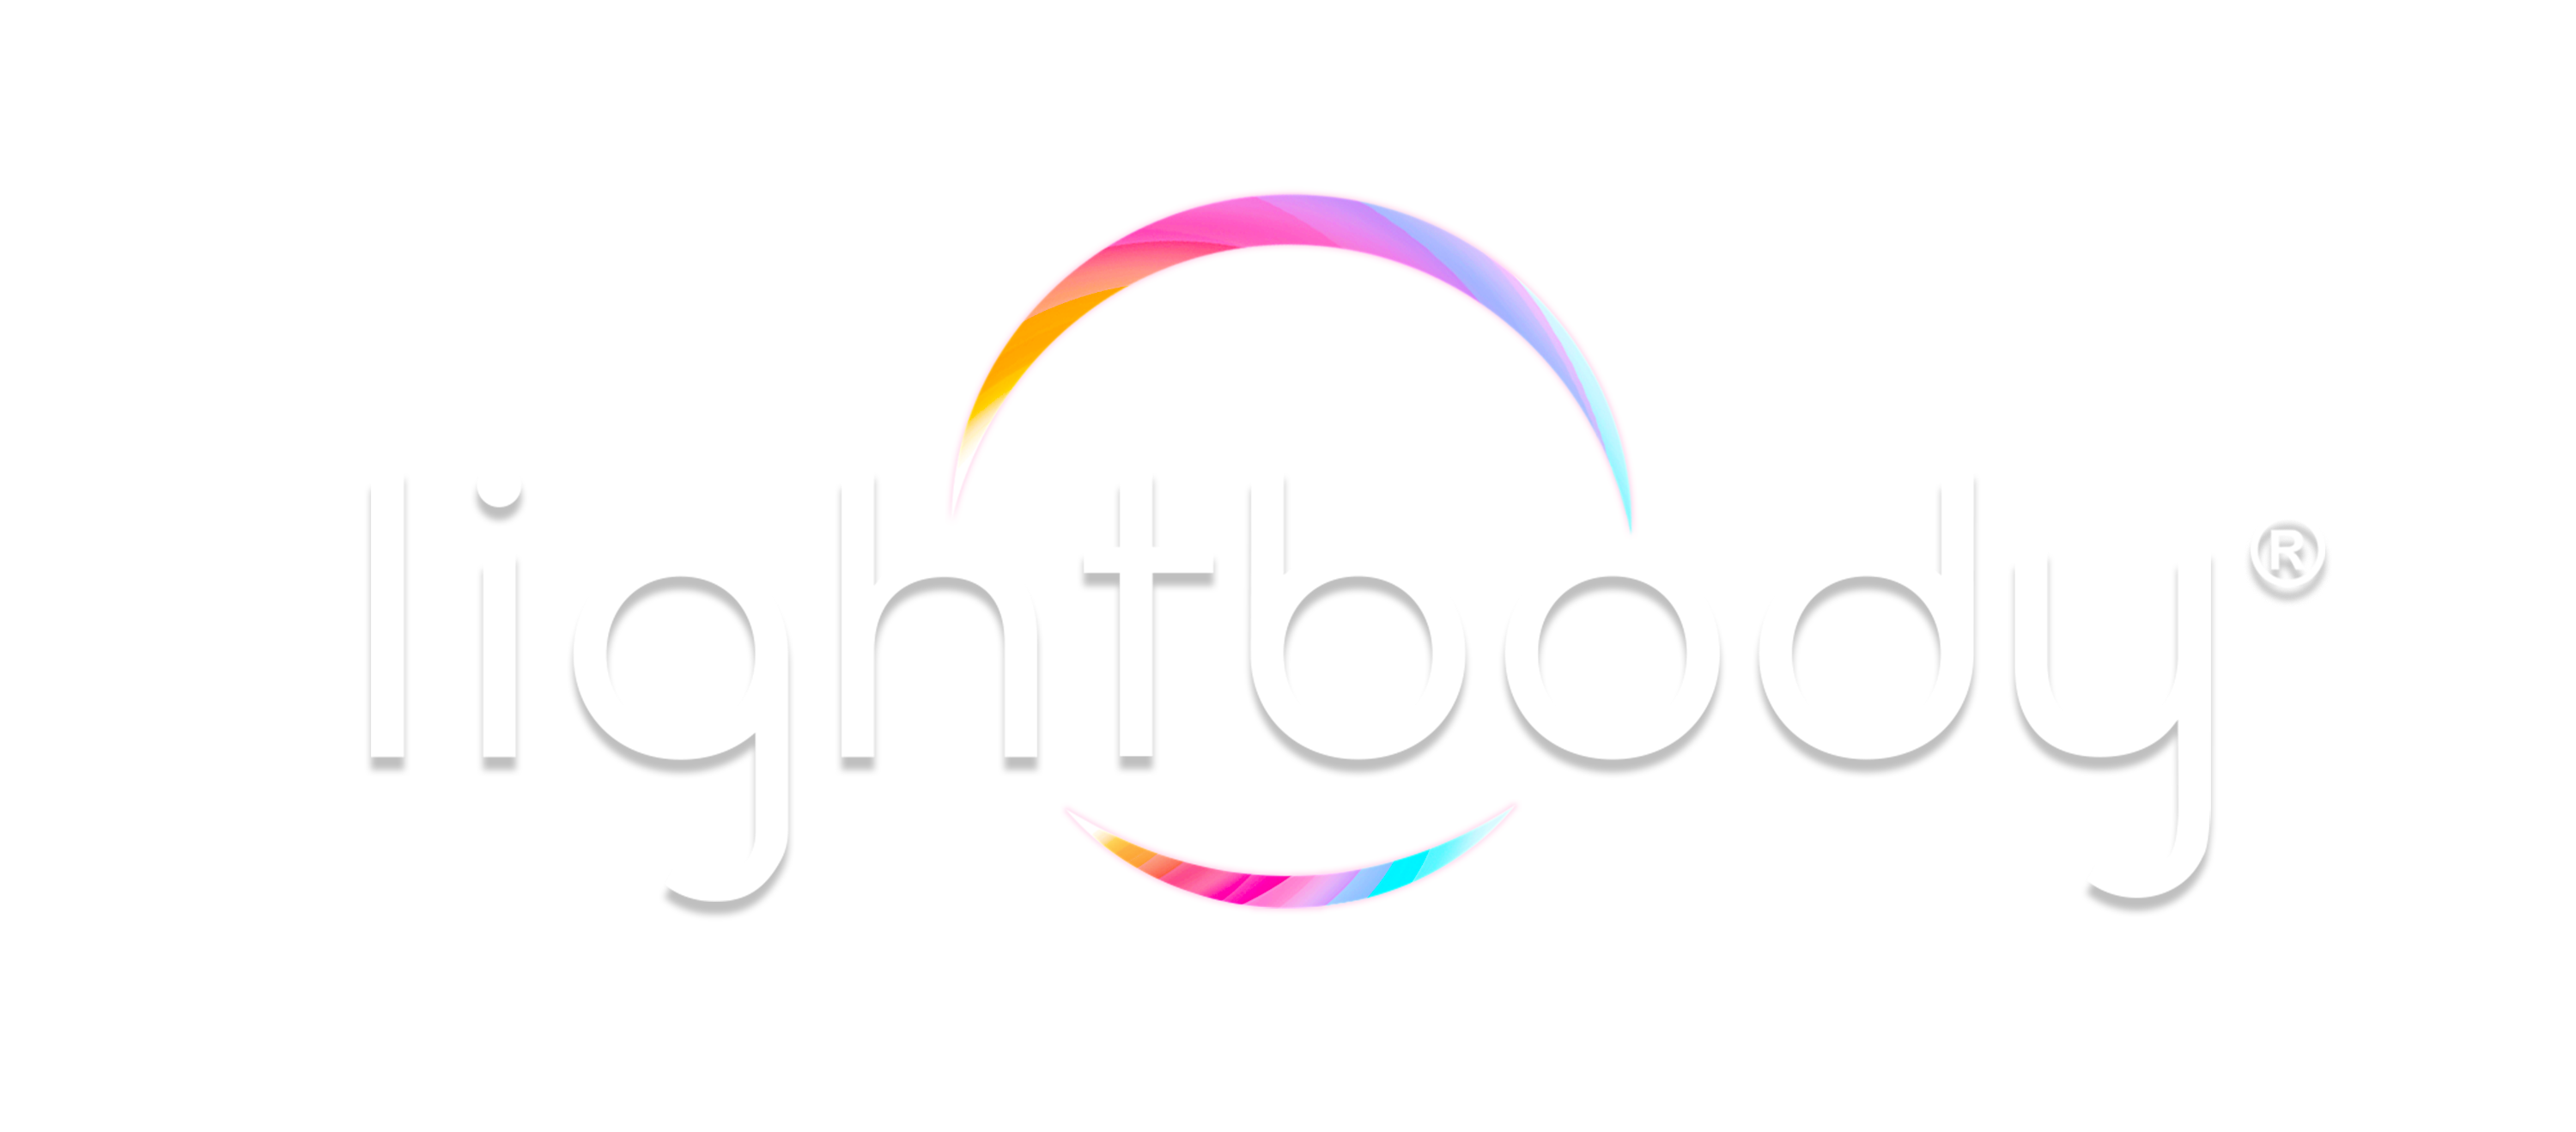 Lightbody Updated Logo